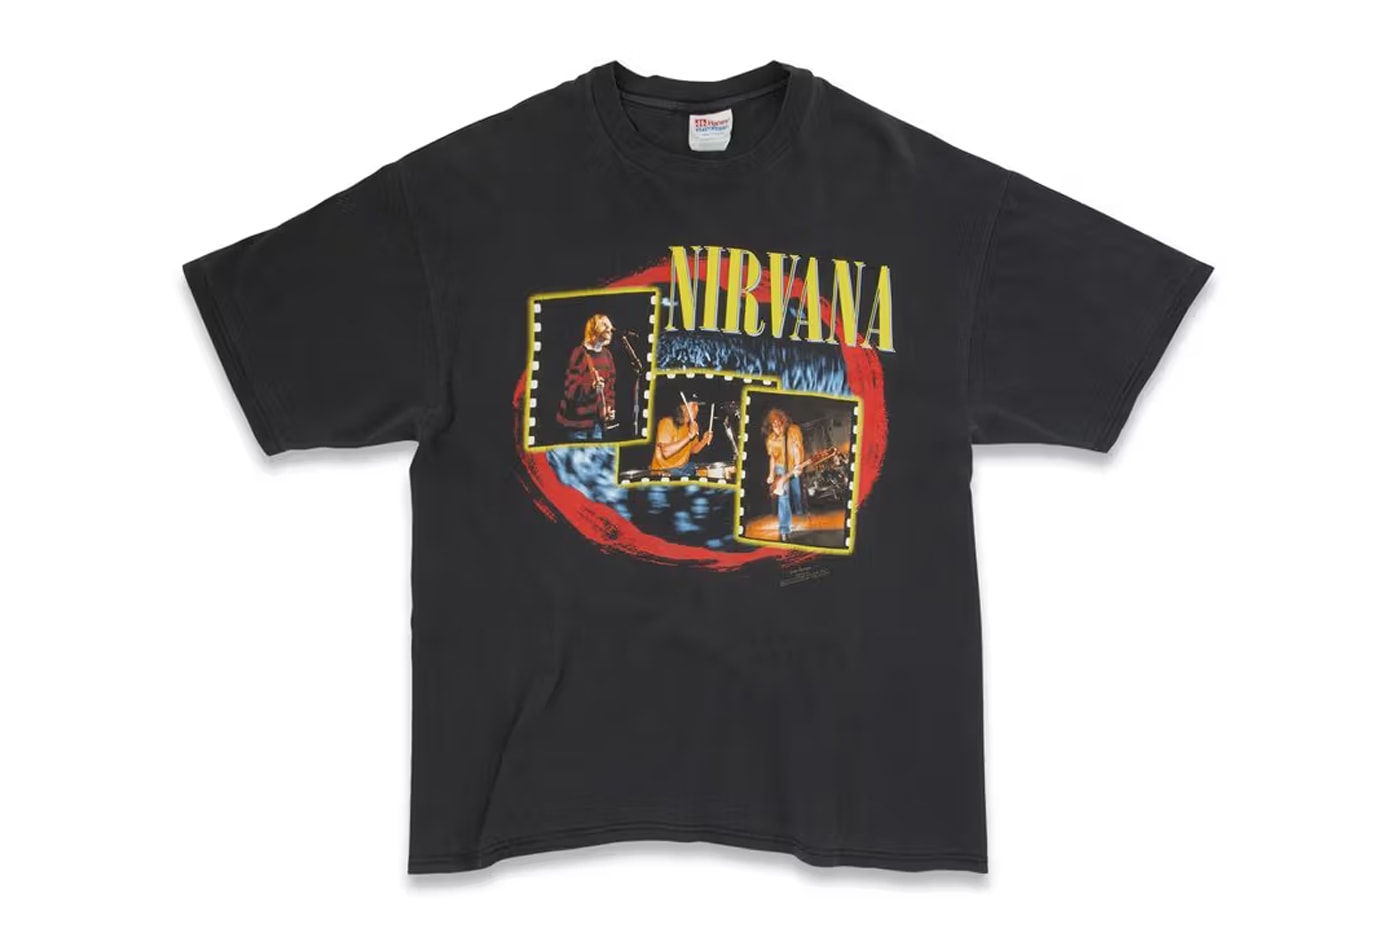 Saint Laurent Rive Droite "The Vintage" Capsule Collection T-Shirts Band Tees Anthony Vaccarello Nirvana The Cranberries Kurt Cobain 